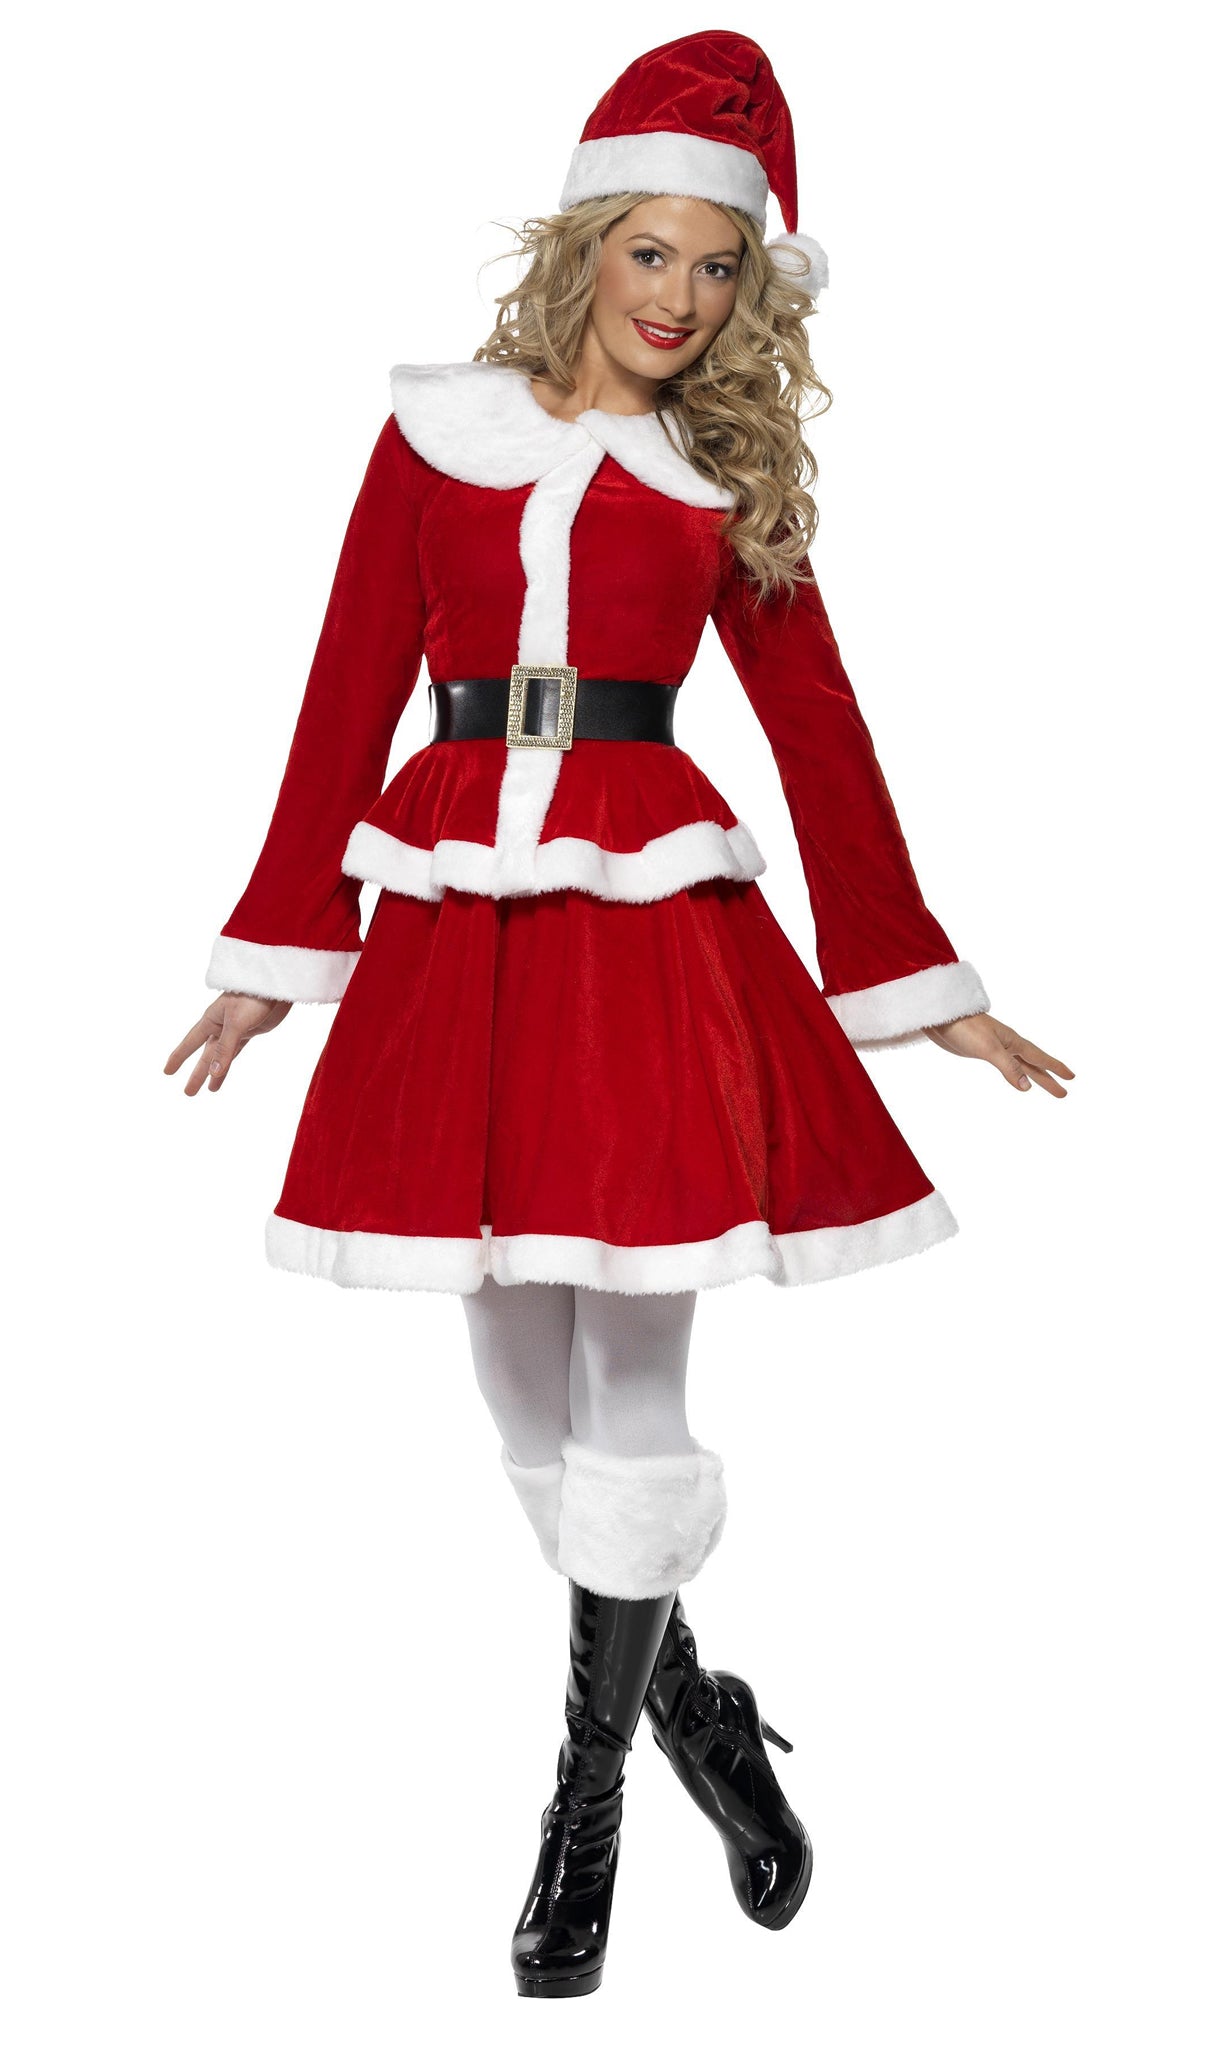 Santa girl costume with jacket, skirt, belt, hat and handwarmer